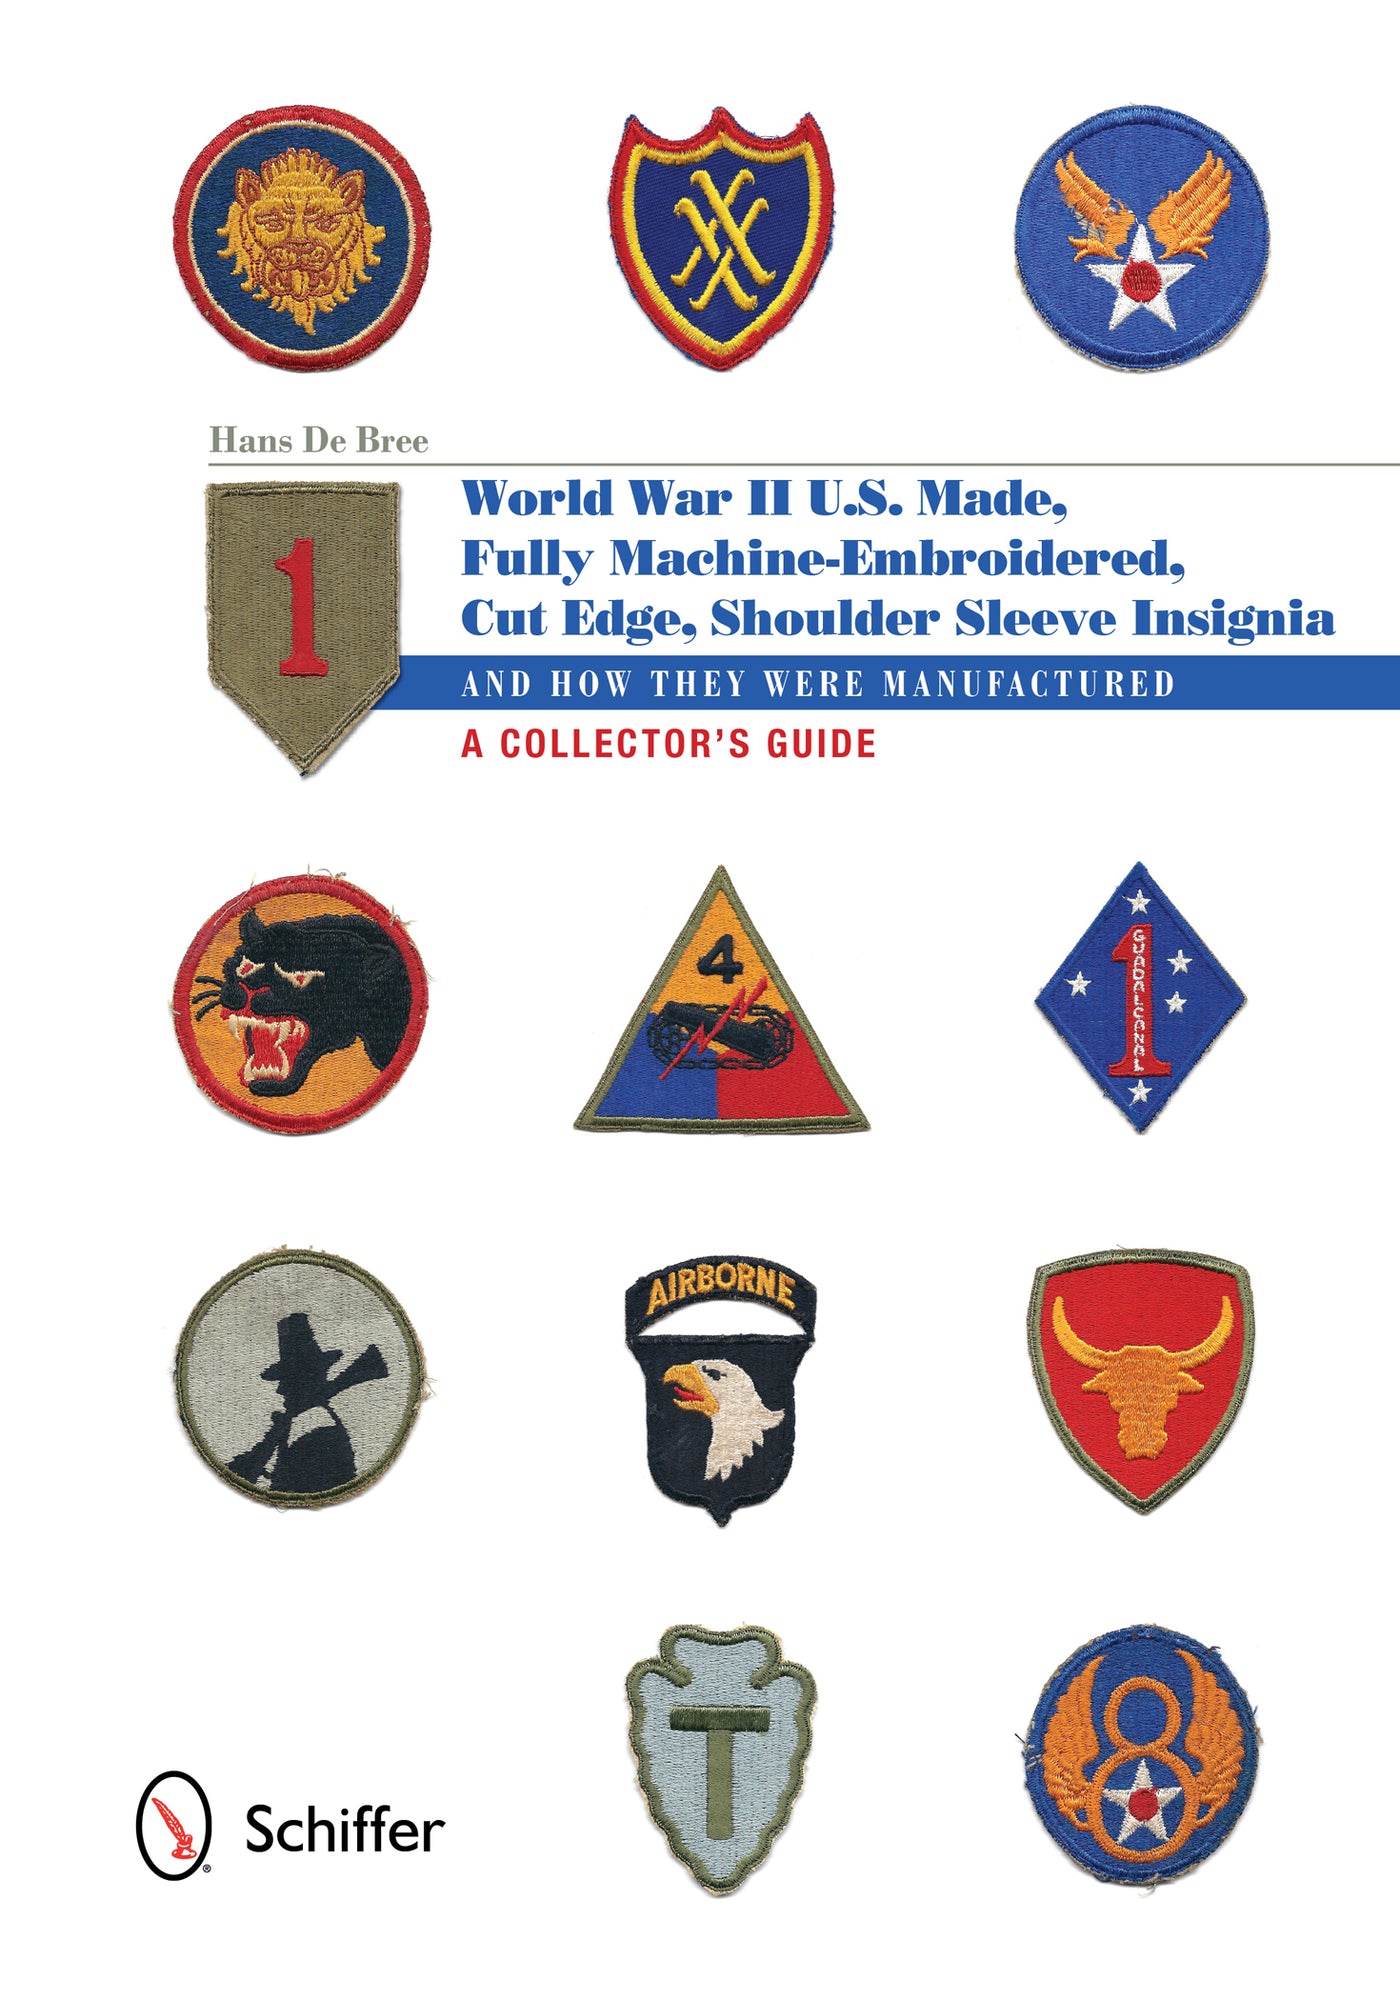 U.S.-Made, Fully Machine-Embroidered, Cut Edge Shoulder Sleeve Insignia of World War II